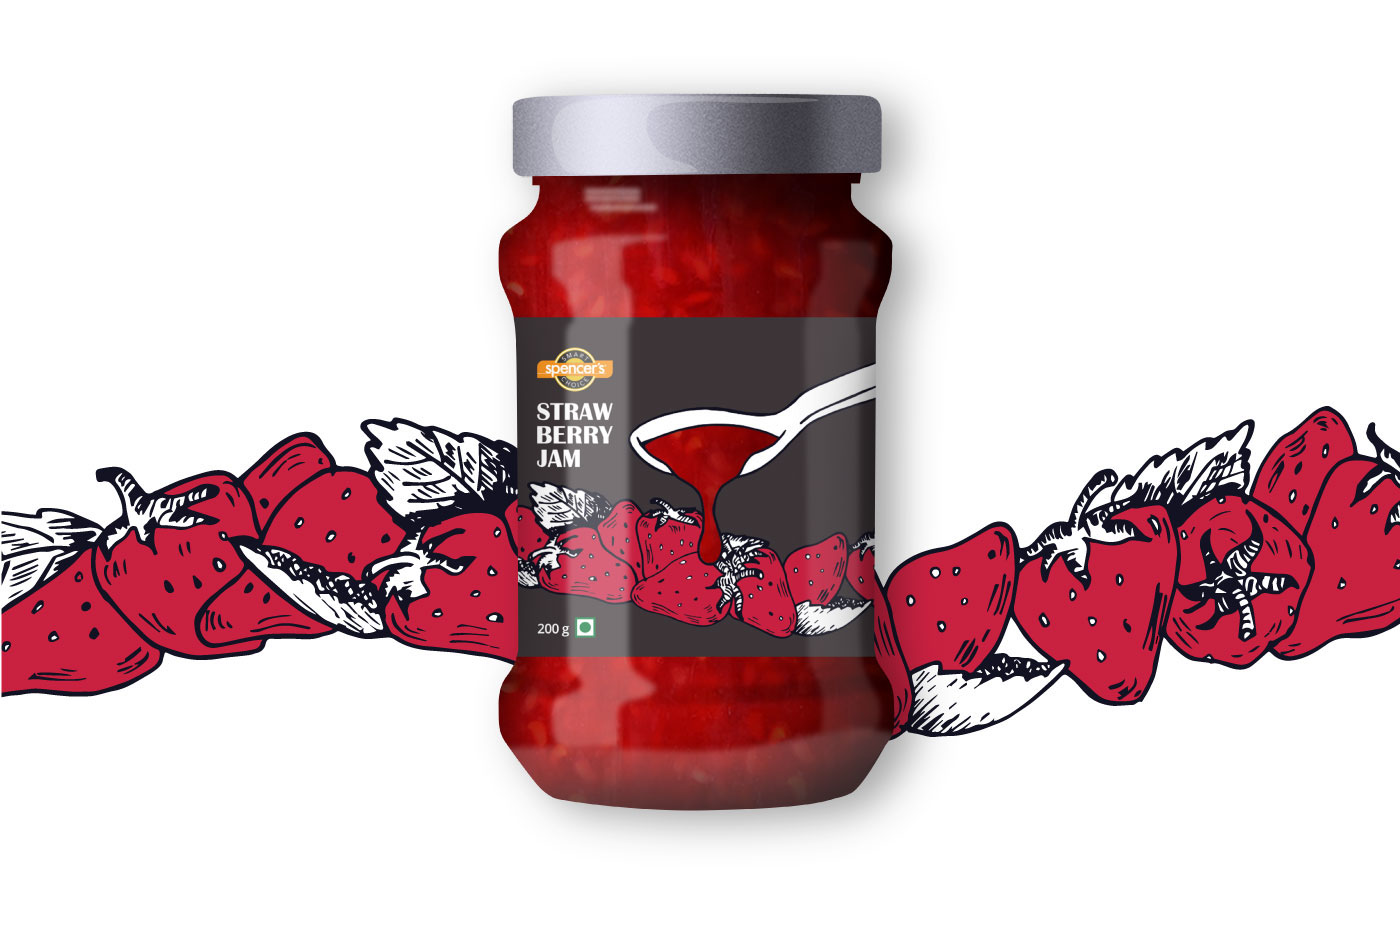 spencer's jam bottle jam packaging Label graphics redesign